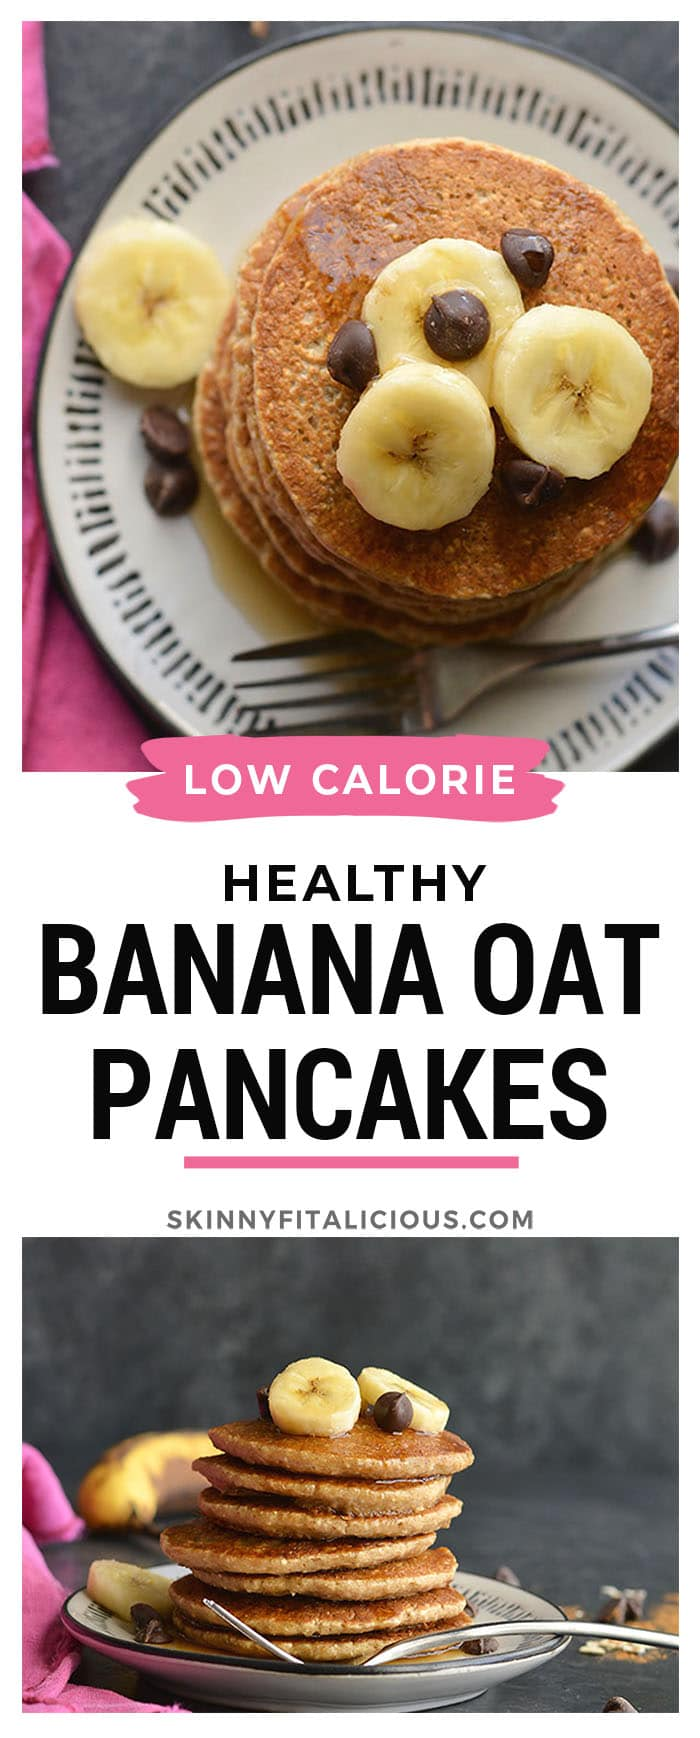 Healthy Low Calorie Banana Oat Pancakes